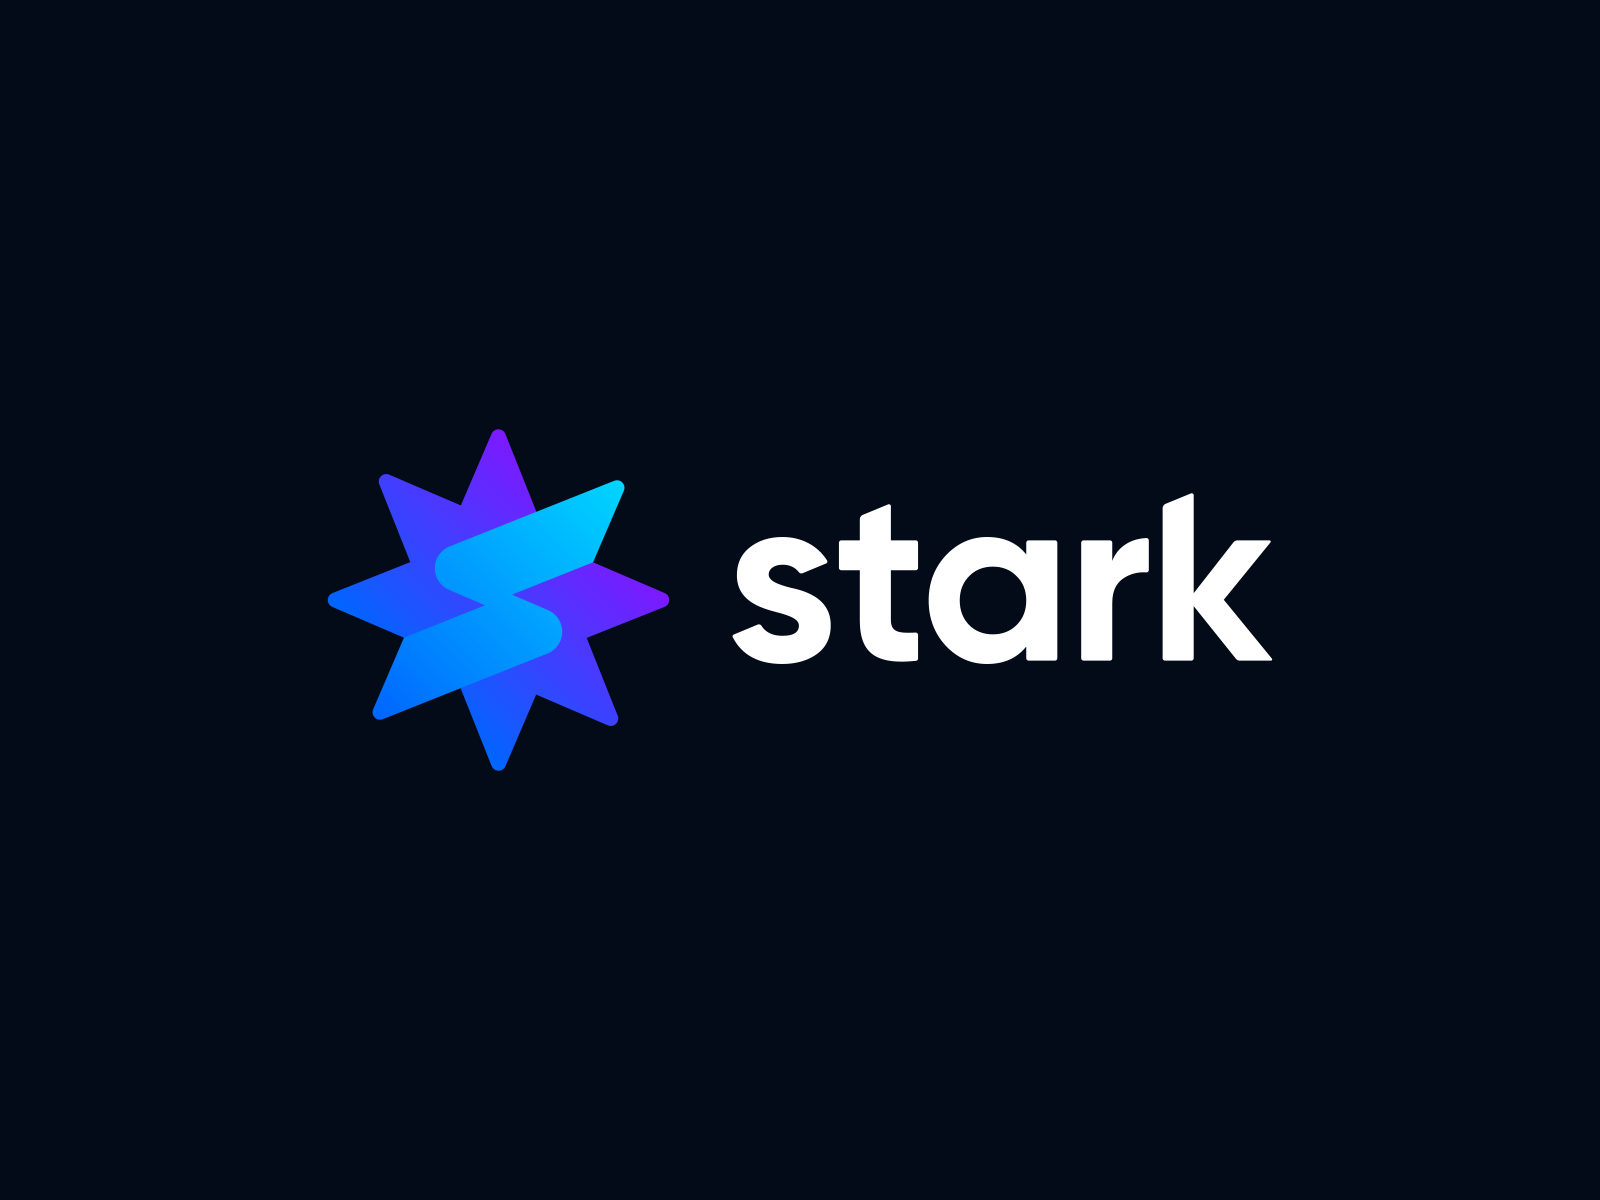 Stark | Energy data, analytics and infrastructure experts